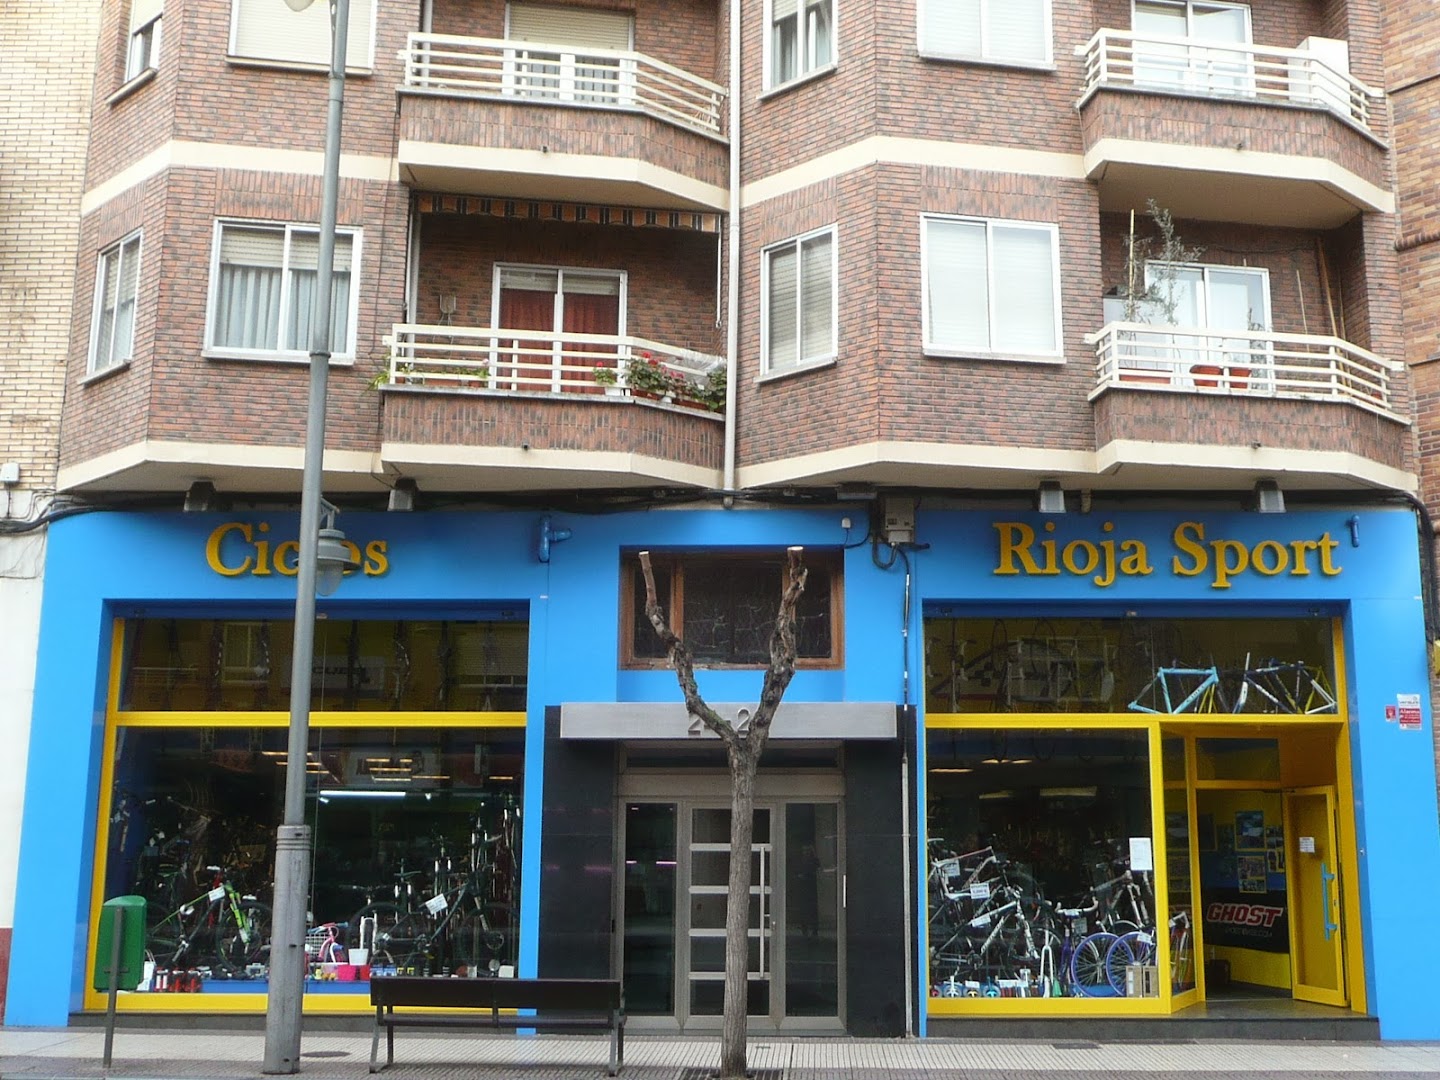 Bicicletas Rioja Sport